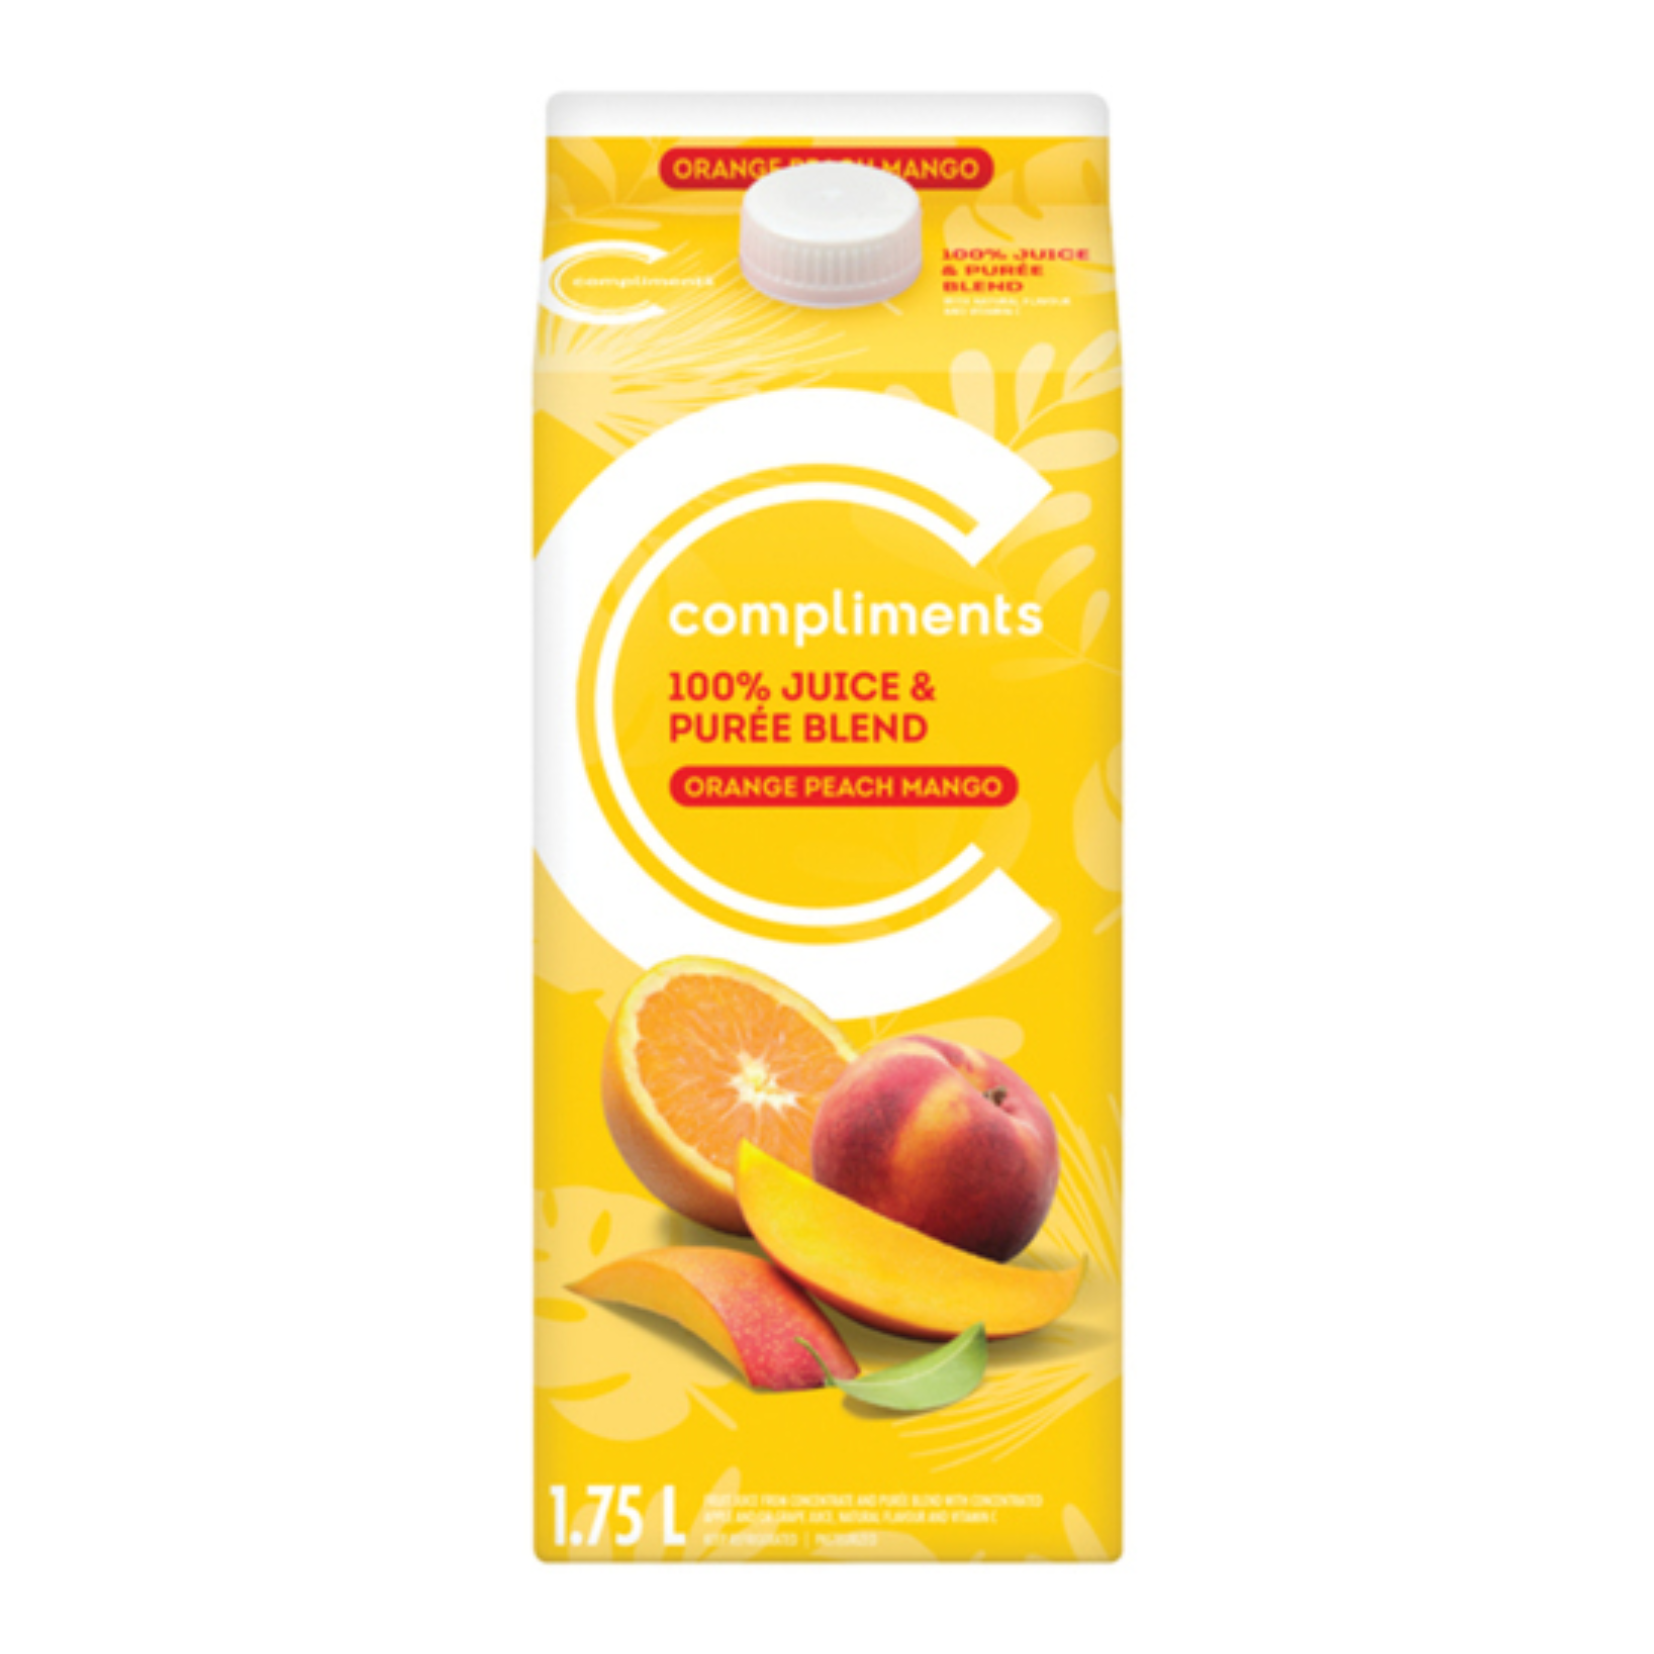 Compliments Orange Peach Mango Fruit Juice 1.75L